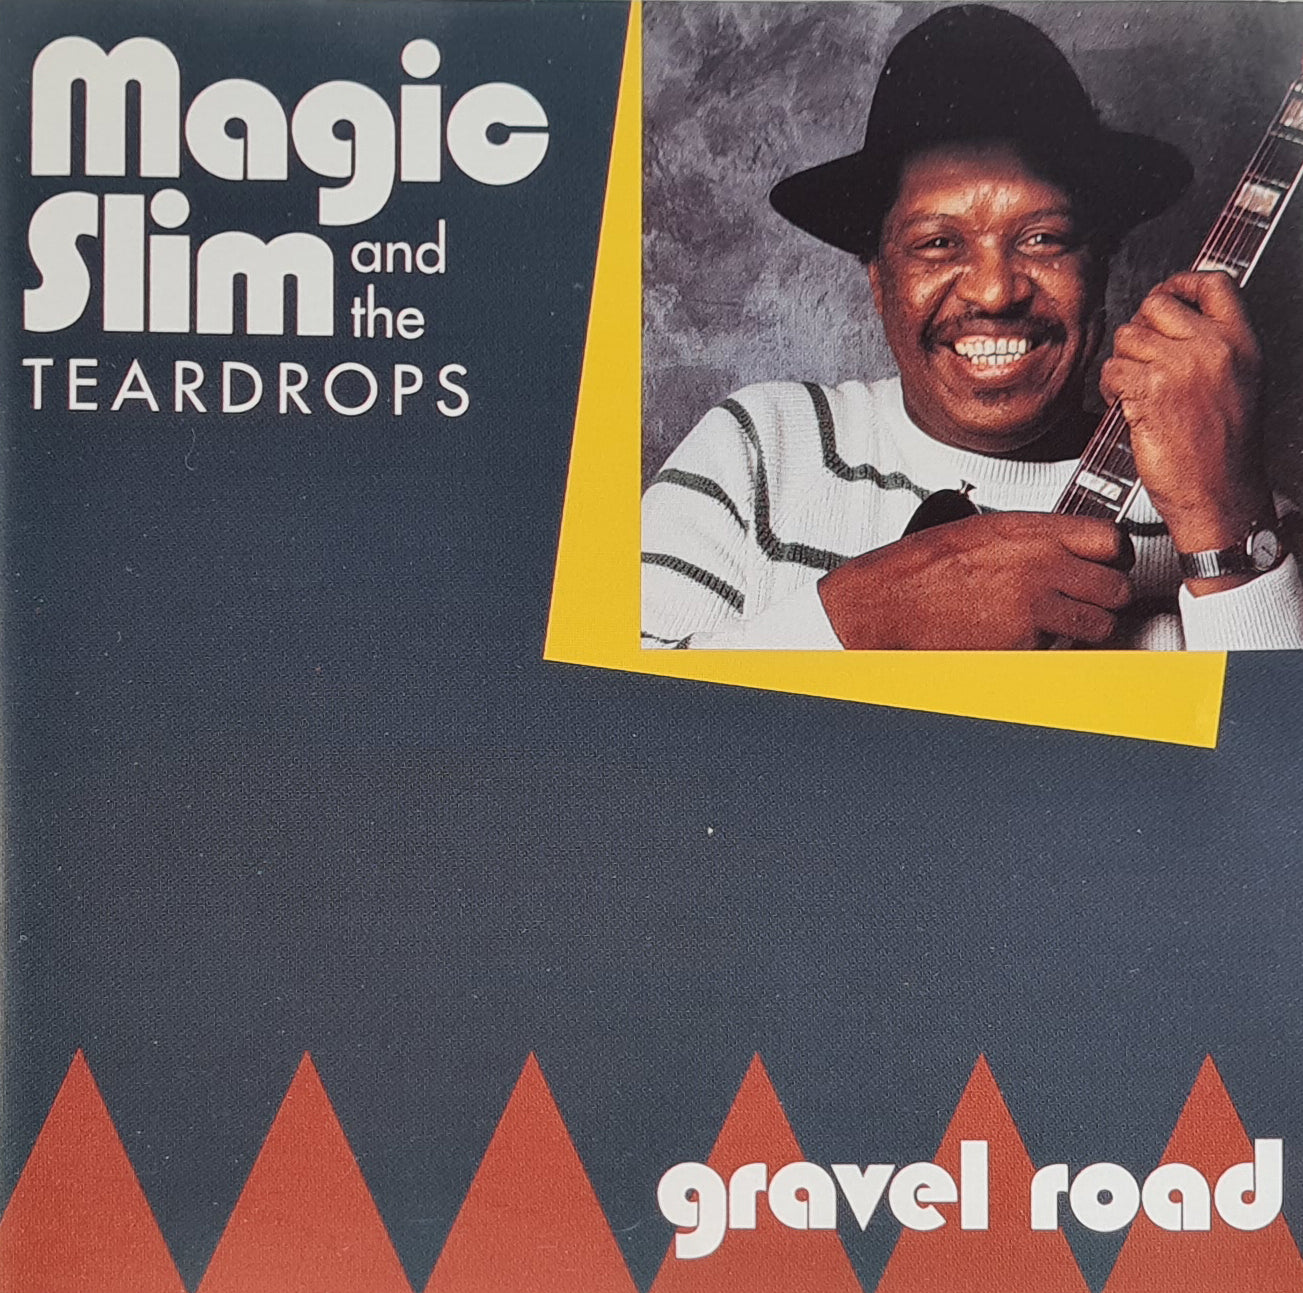 Magic Slim and the Teardrops - Gravel Road (CD)